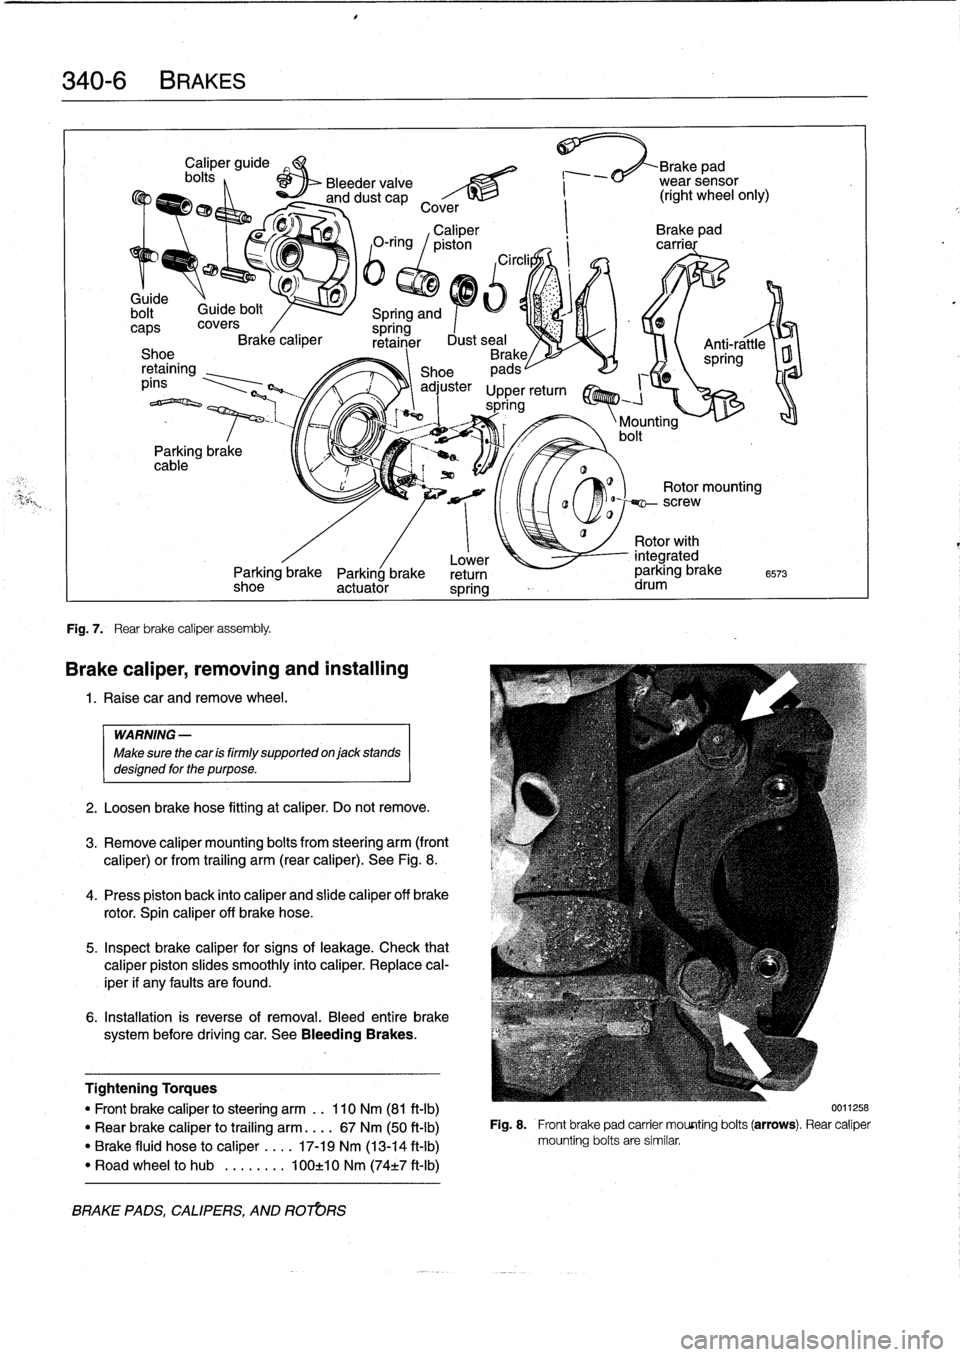 BMW 323i 1993 E36 Owners Guide 
340-
6BRAKES

bolt~

	

Guide
bolt

caps
covers
Brake
caliper
Shoe
retaining
píns

Parking
brake
cable

Fig
.
7
.

	

Rear
brake
caliper
assembly
.

Caliper
guide

	

Brake

	

ad
bolts
,

	

Bleede